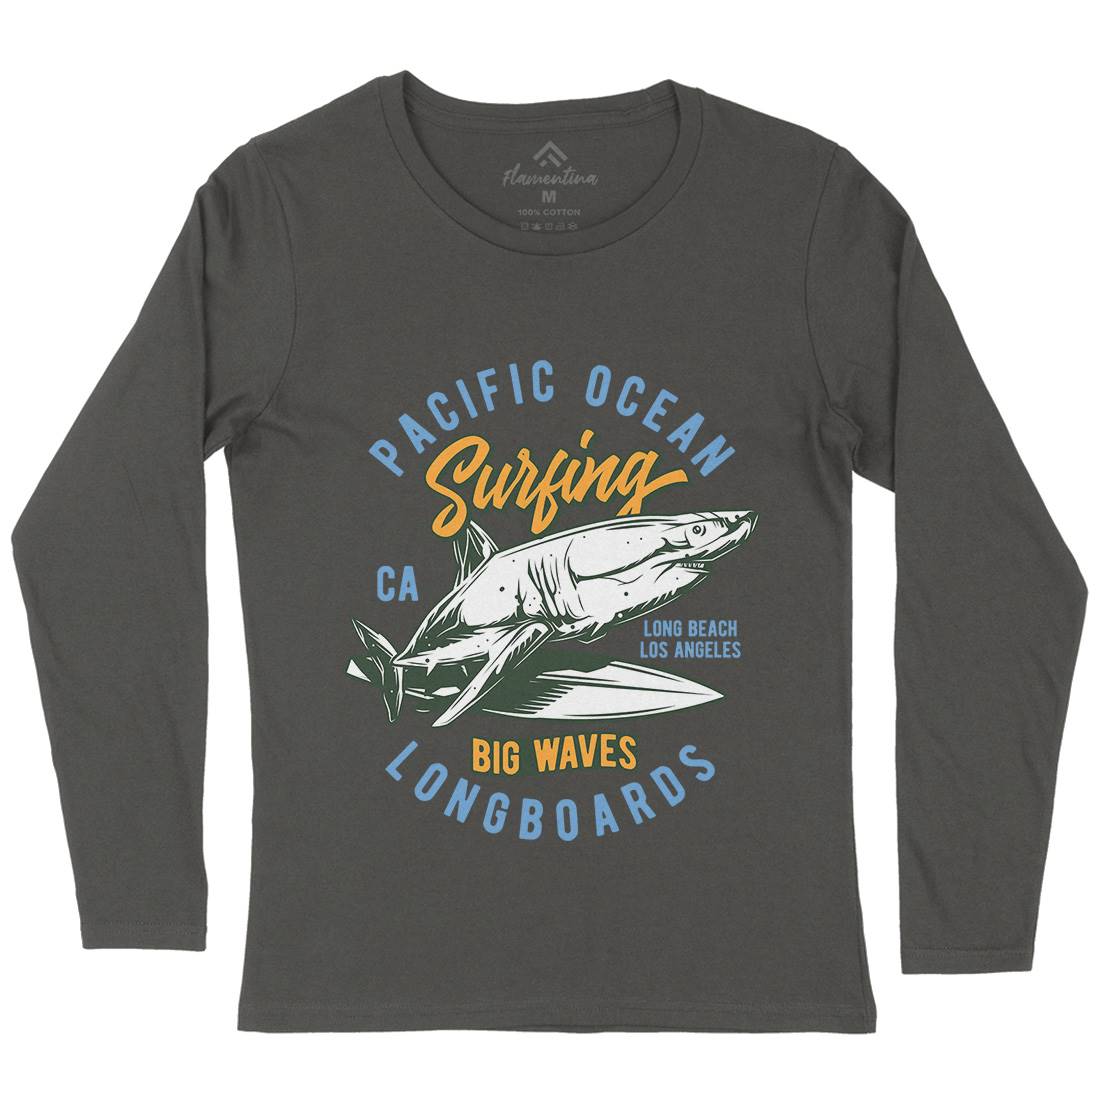 Pacific Ocean Surfing Womens Long Sleeve T-Shirt Surf B869